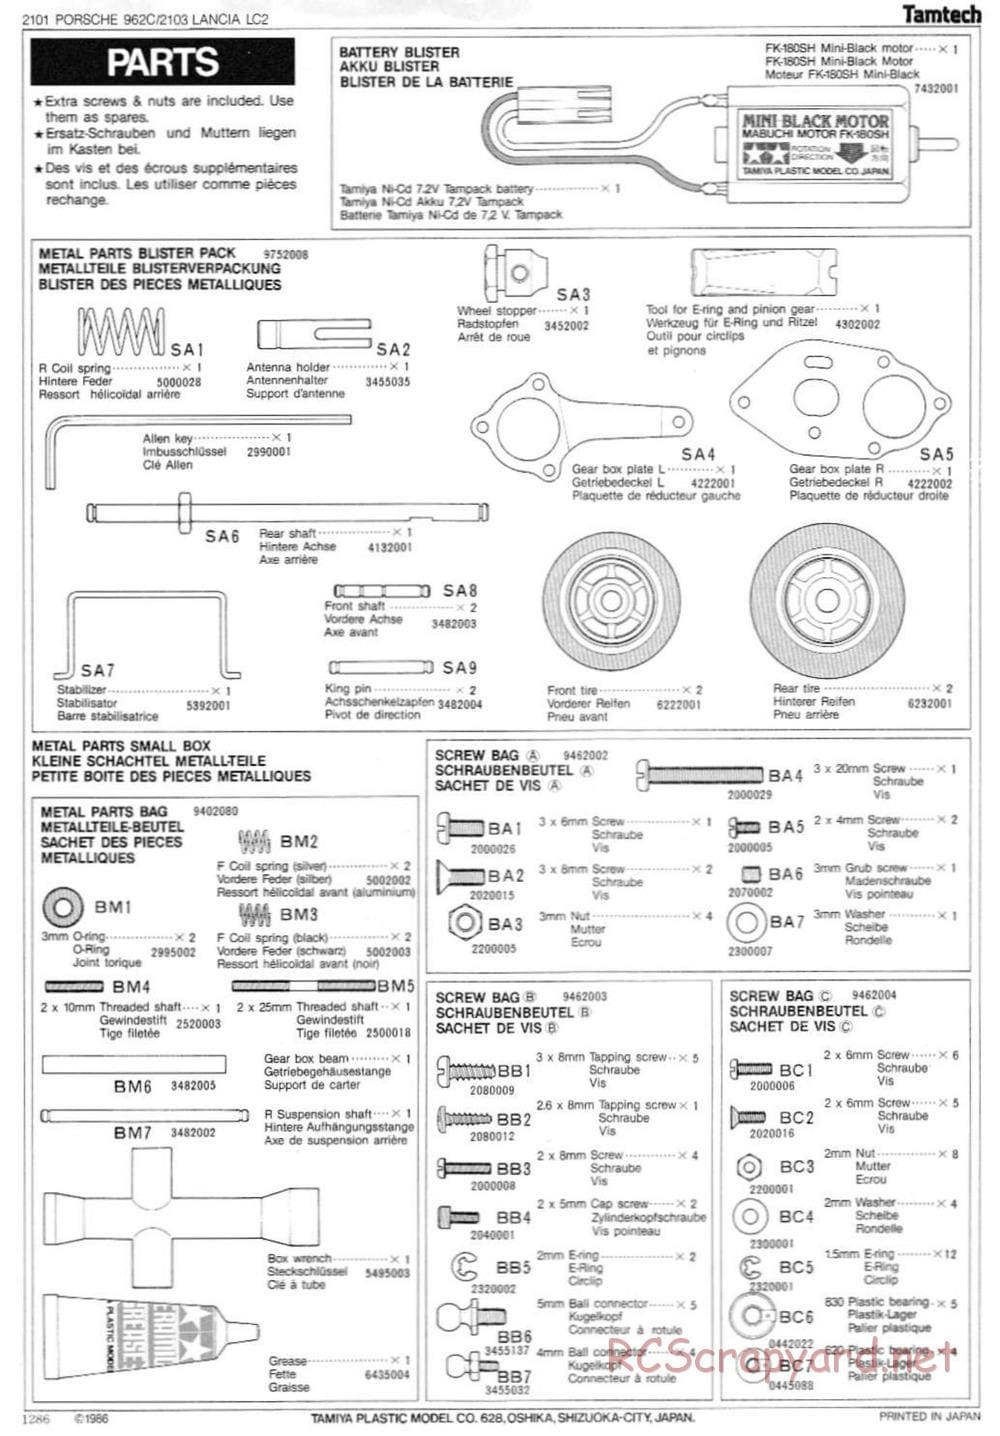 Tamiya - Tamtech - Lancia LC2 Chassis - Manual - Page 17